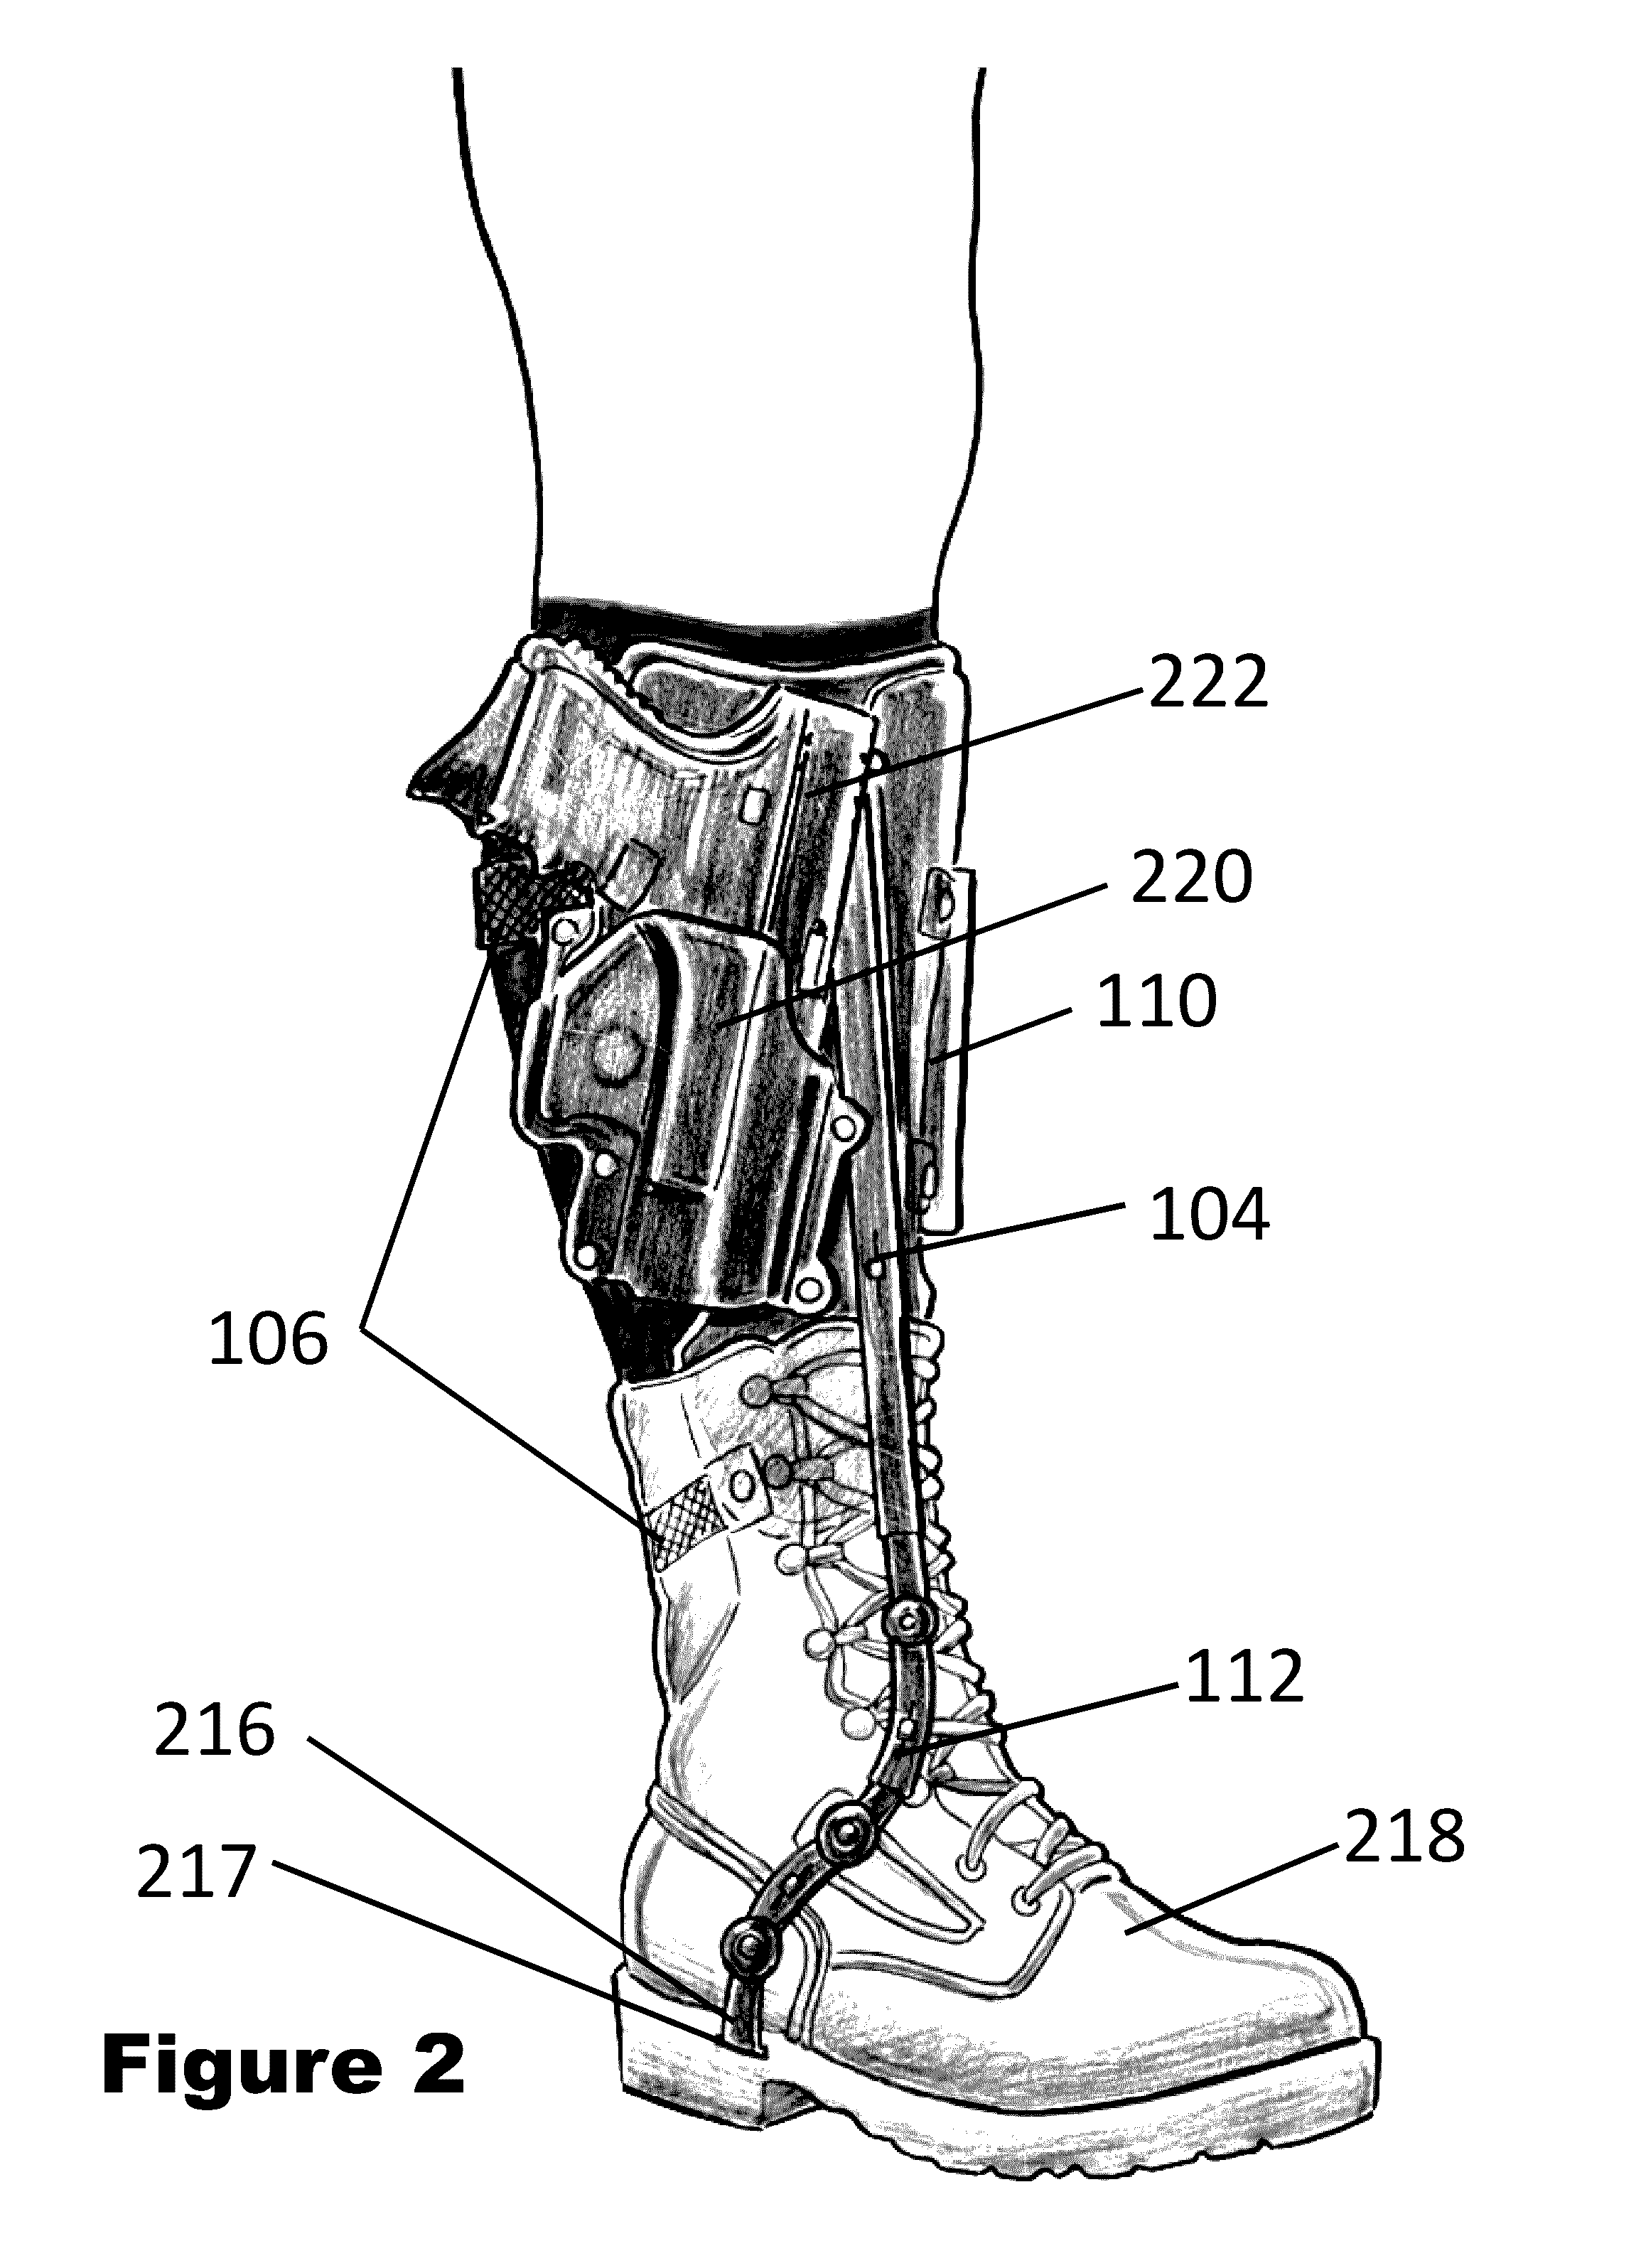 Foot orthosis and exoskeleton